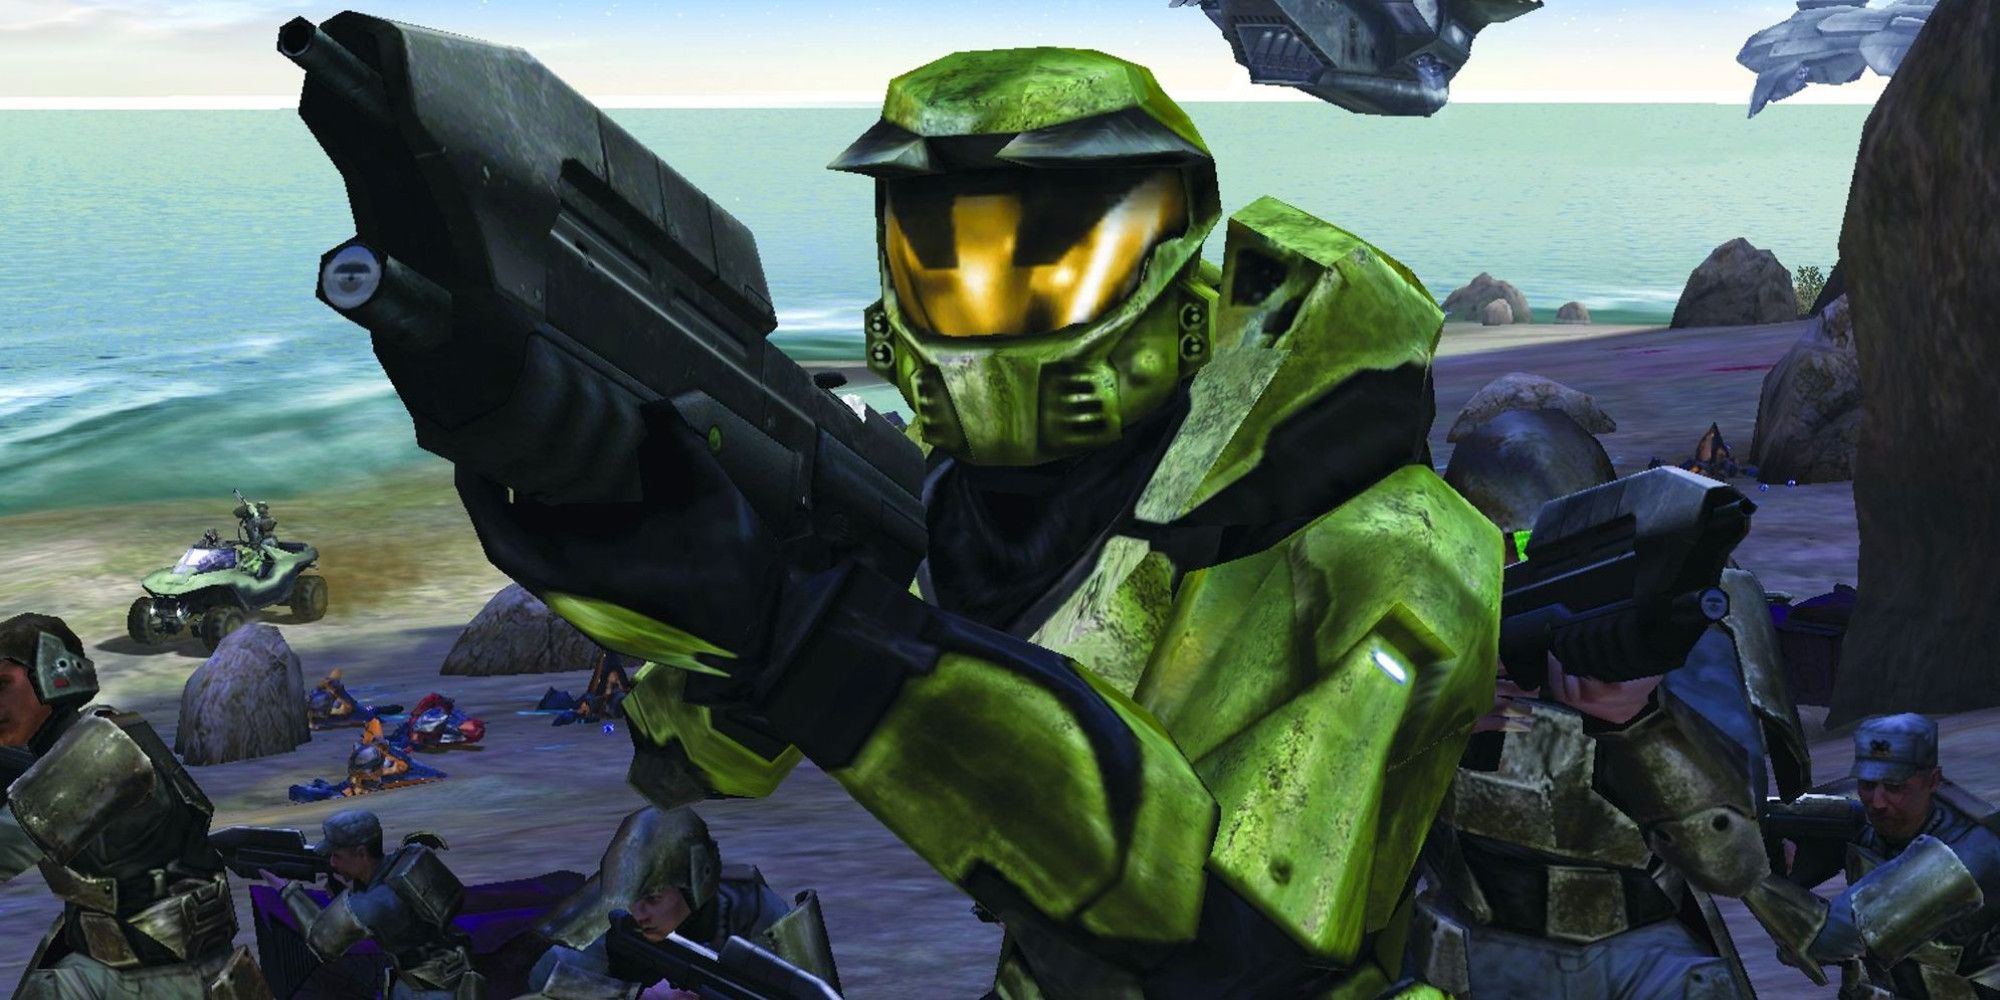 Master Chief brandishing gun on beach in Halo Combat Evolved